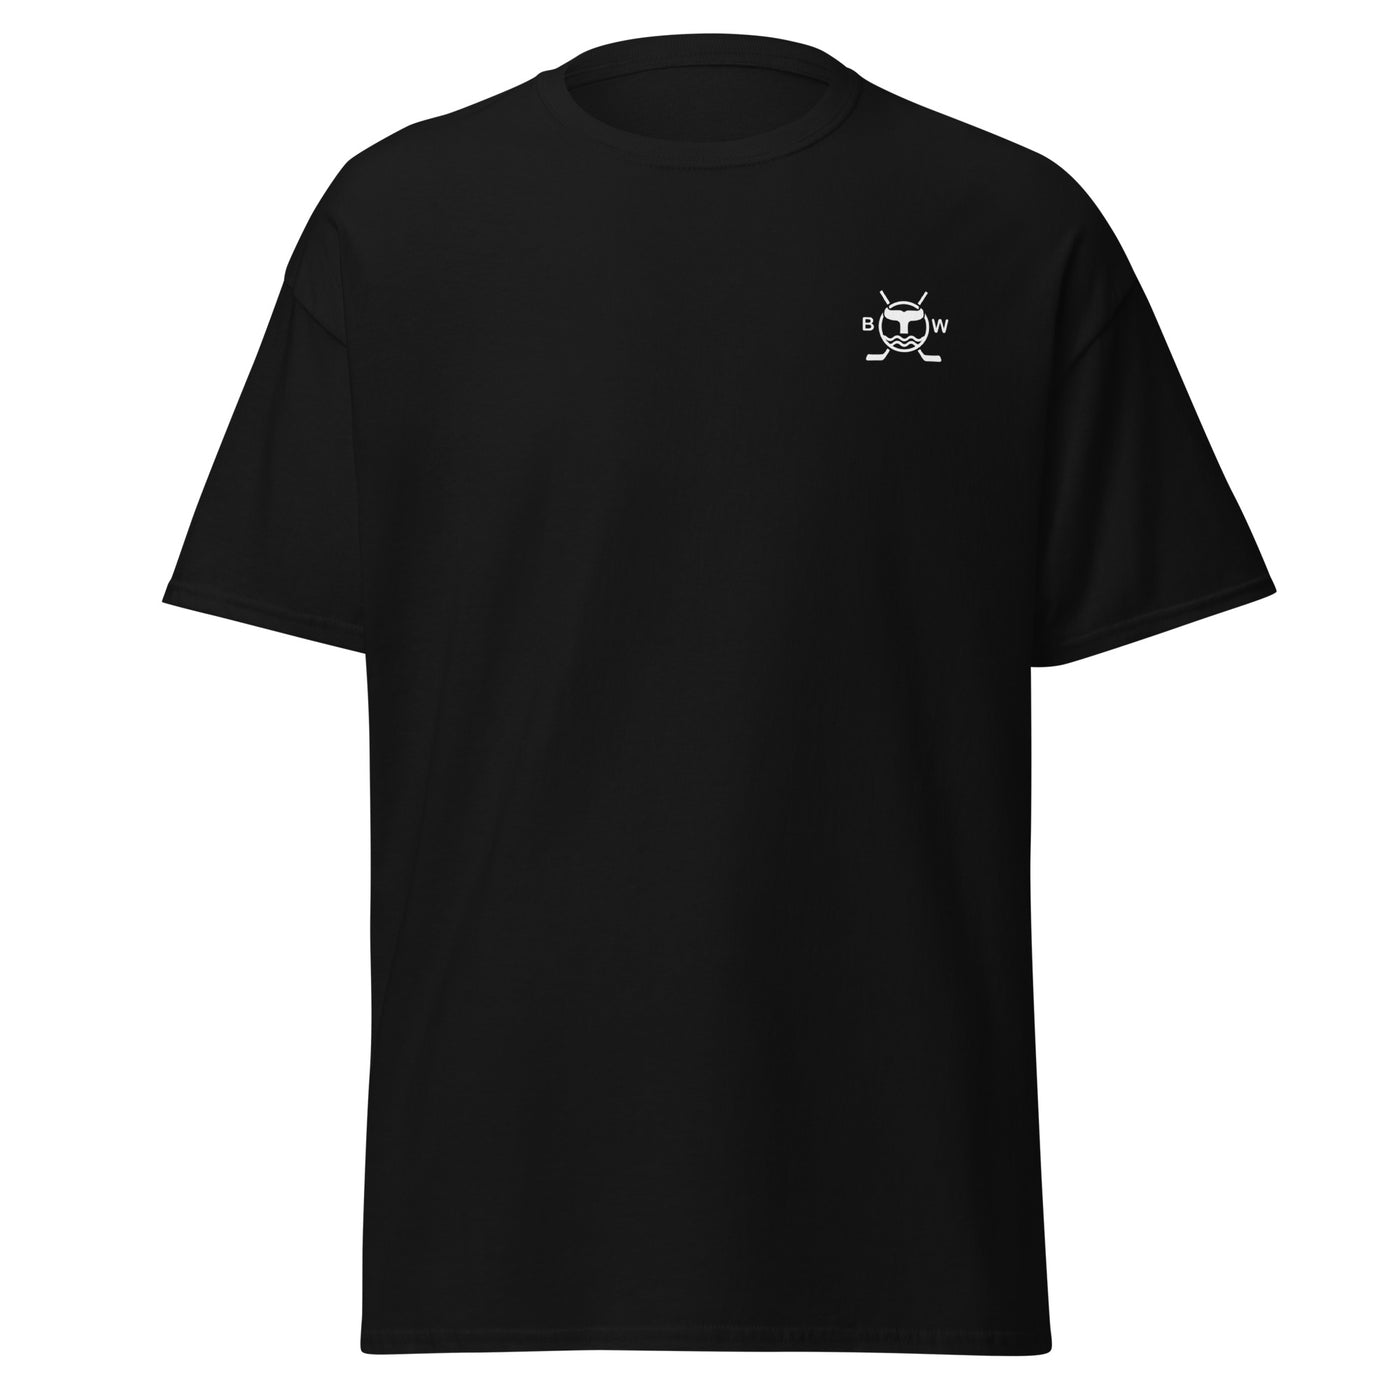 BWHockey Unisex T-Shirt